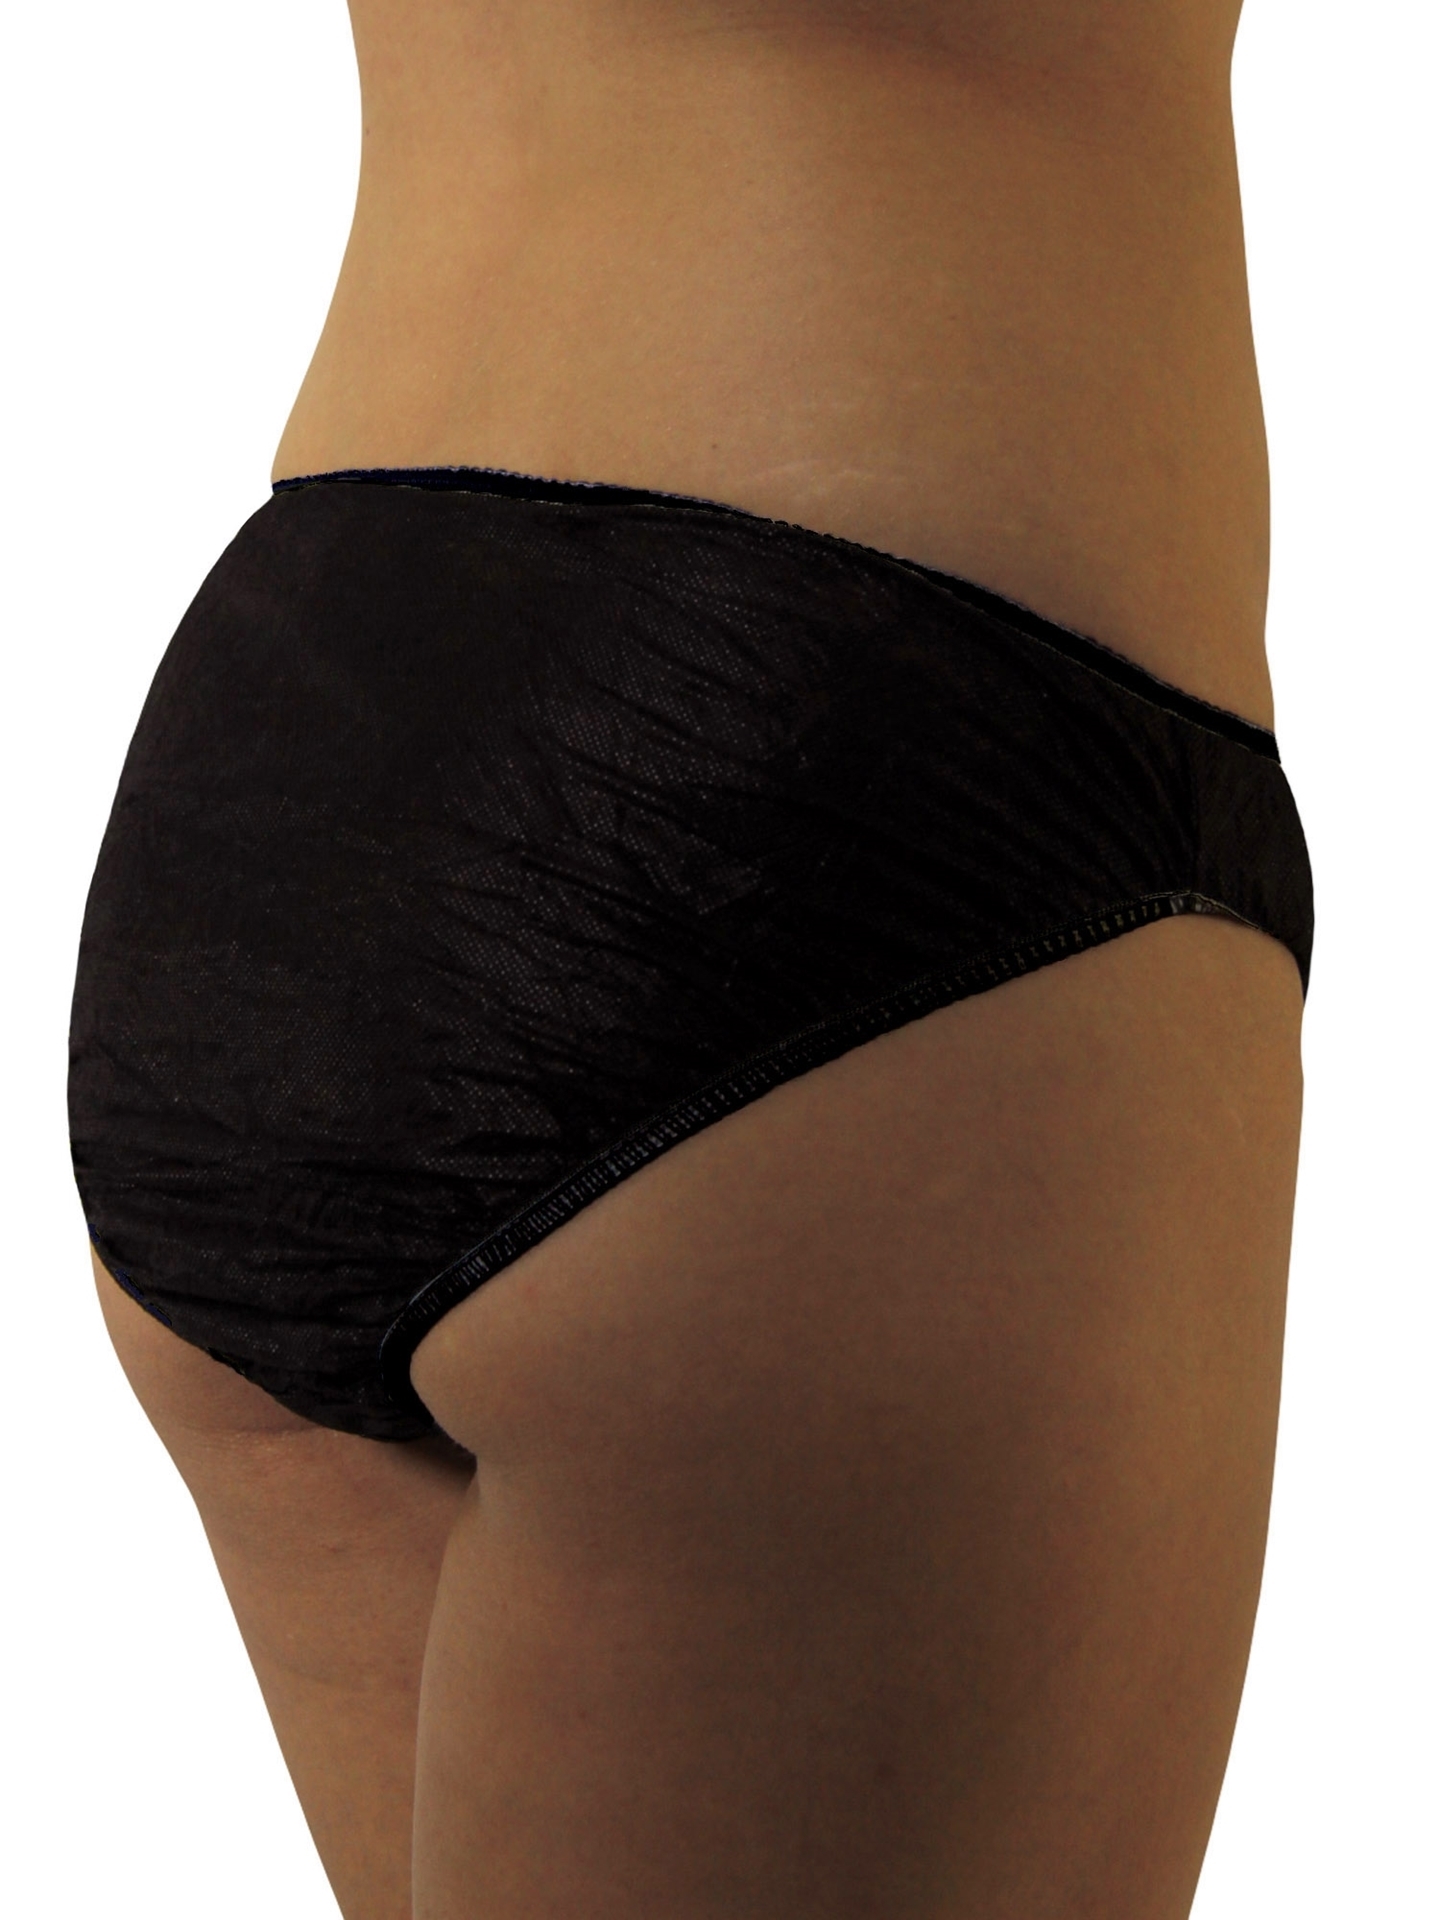 https://www.underworks.com/images/thumbs/0001629_womens-disposable-panties-10-pack.jpeg